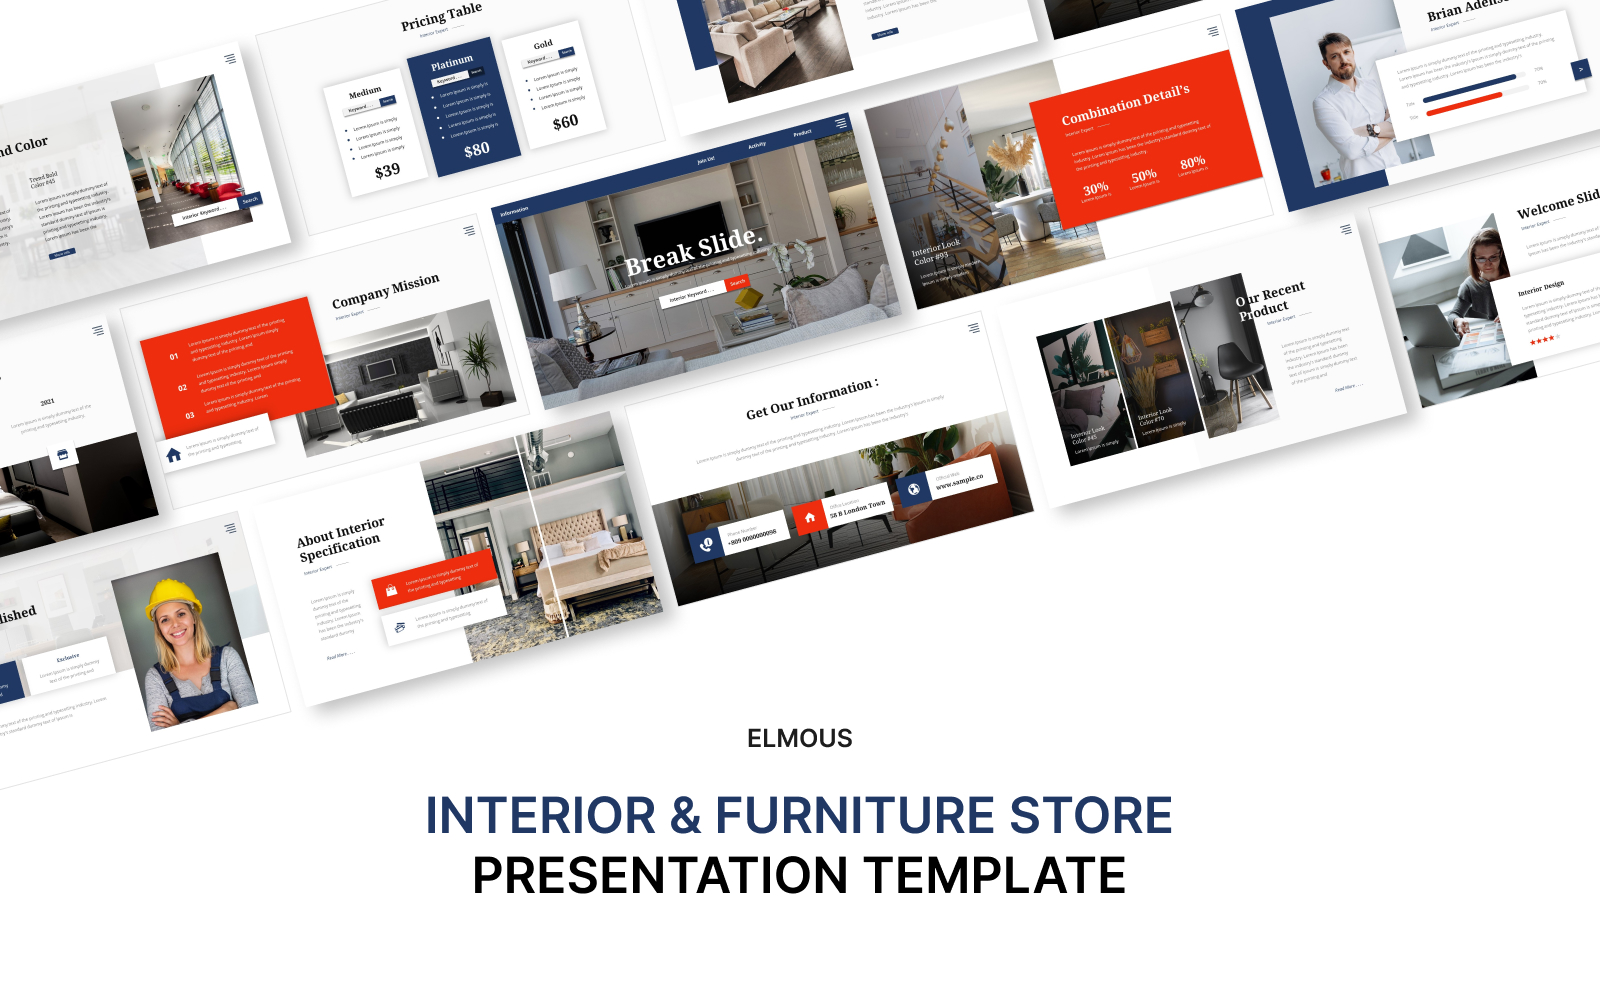 Maddison - Interior & Furniture Store Powerpoint Presentation Template